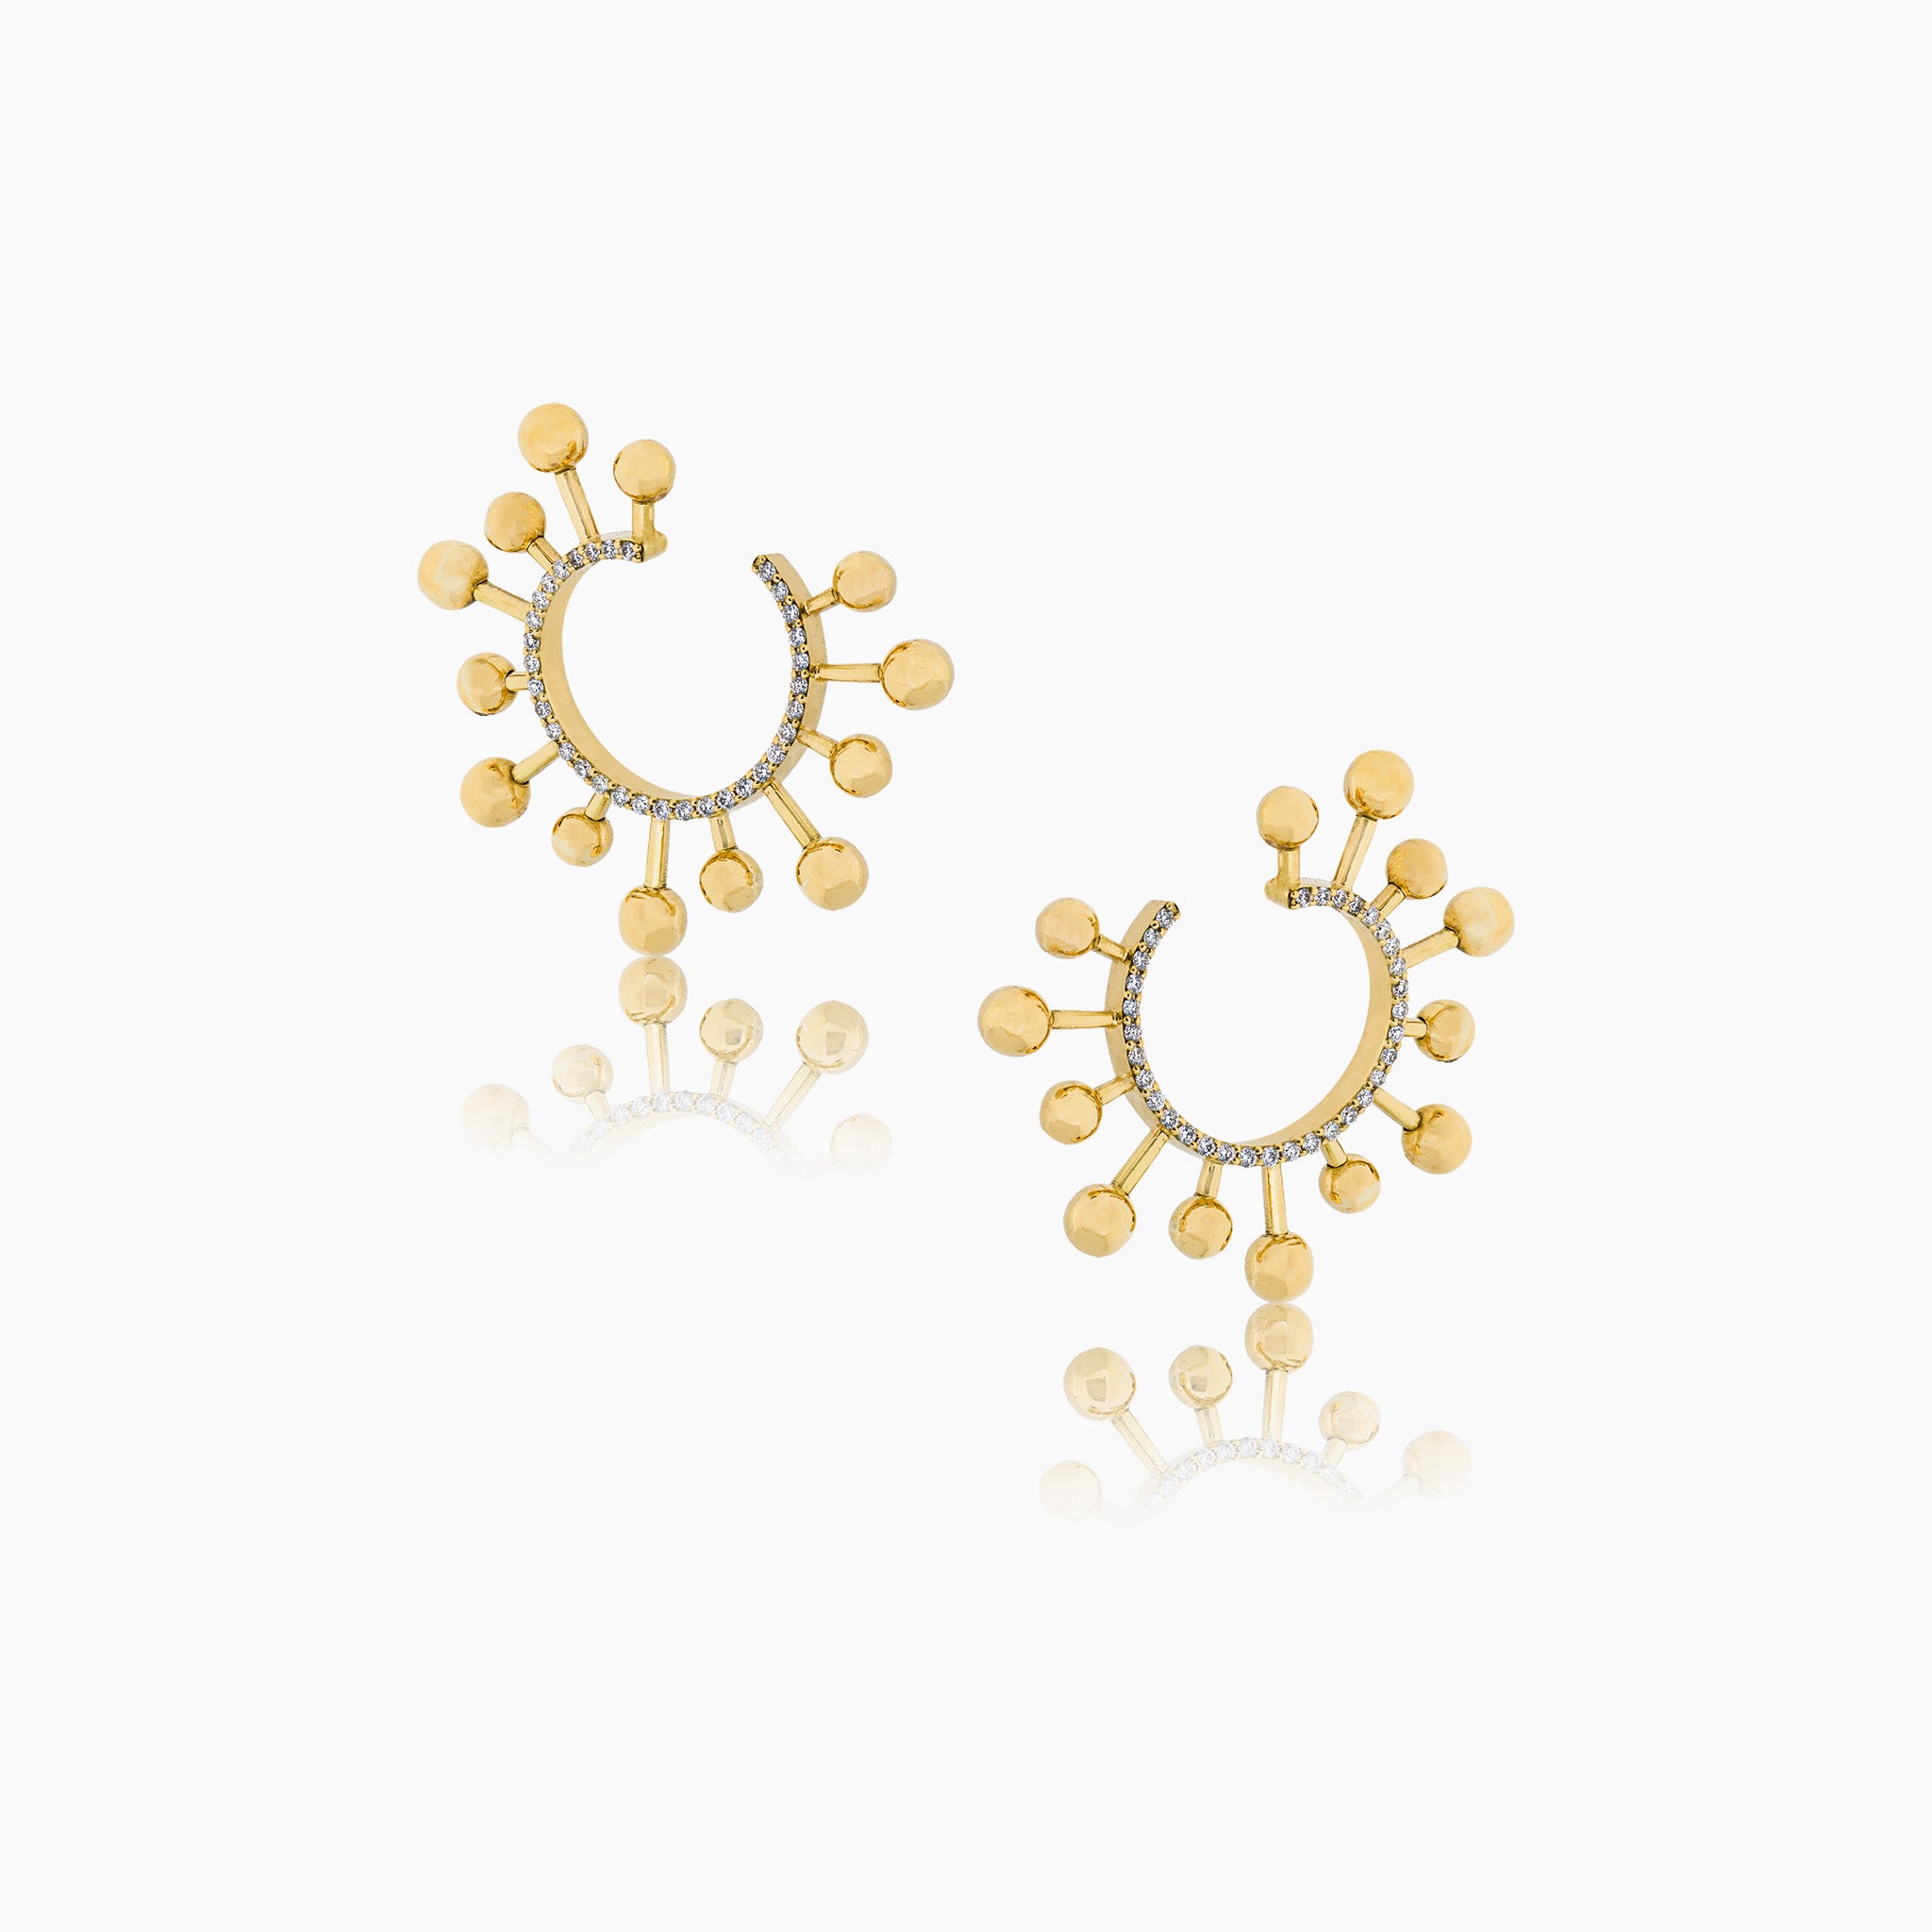 Helios Earrings: Radiant sun-inspired fine jewellery, set against an elegant off-white backdrop